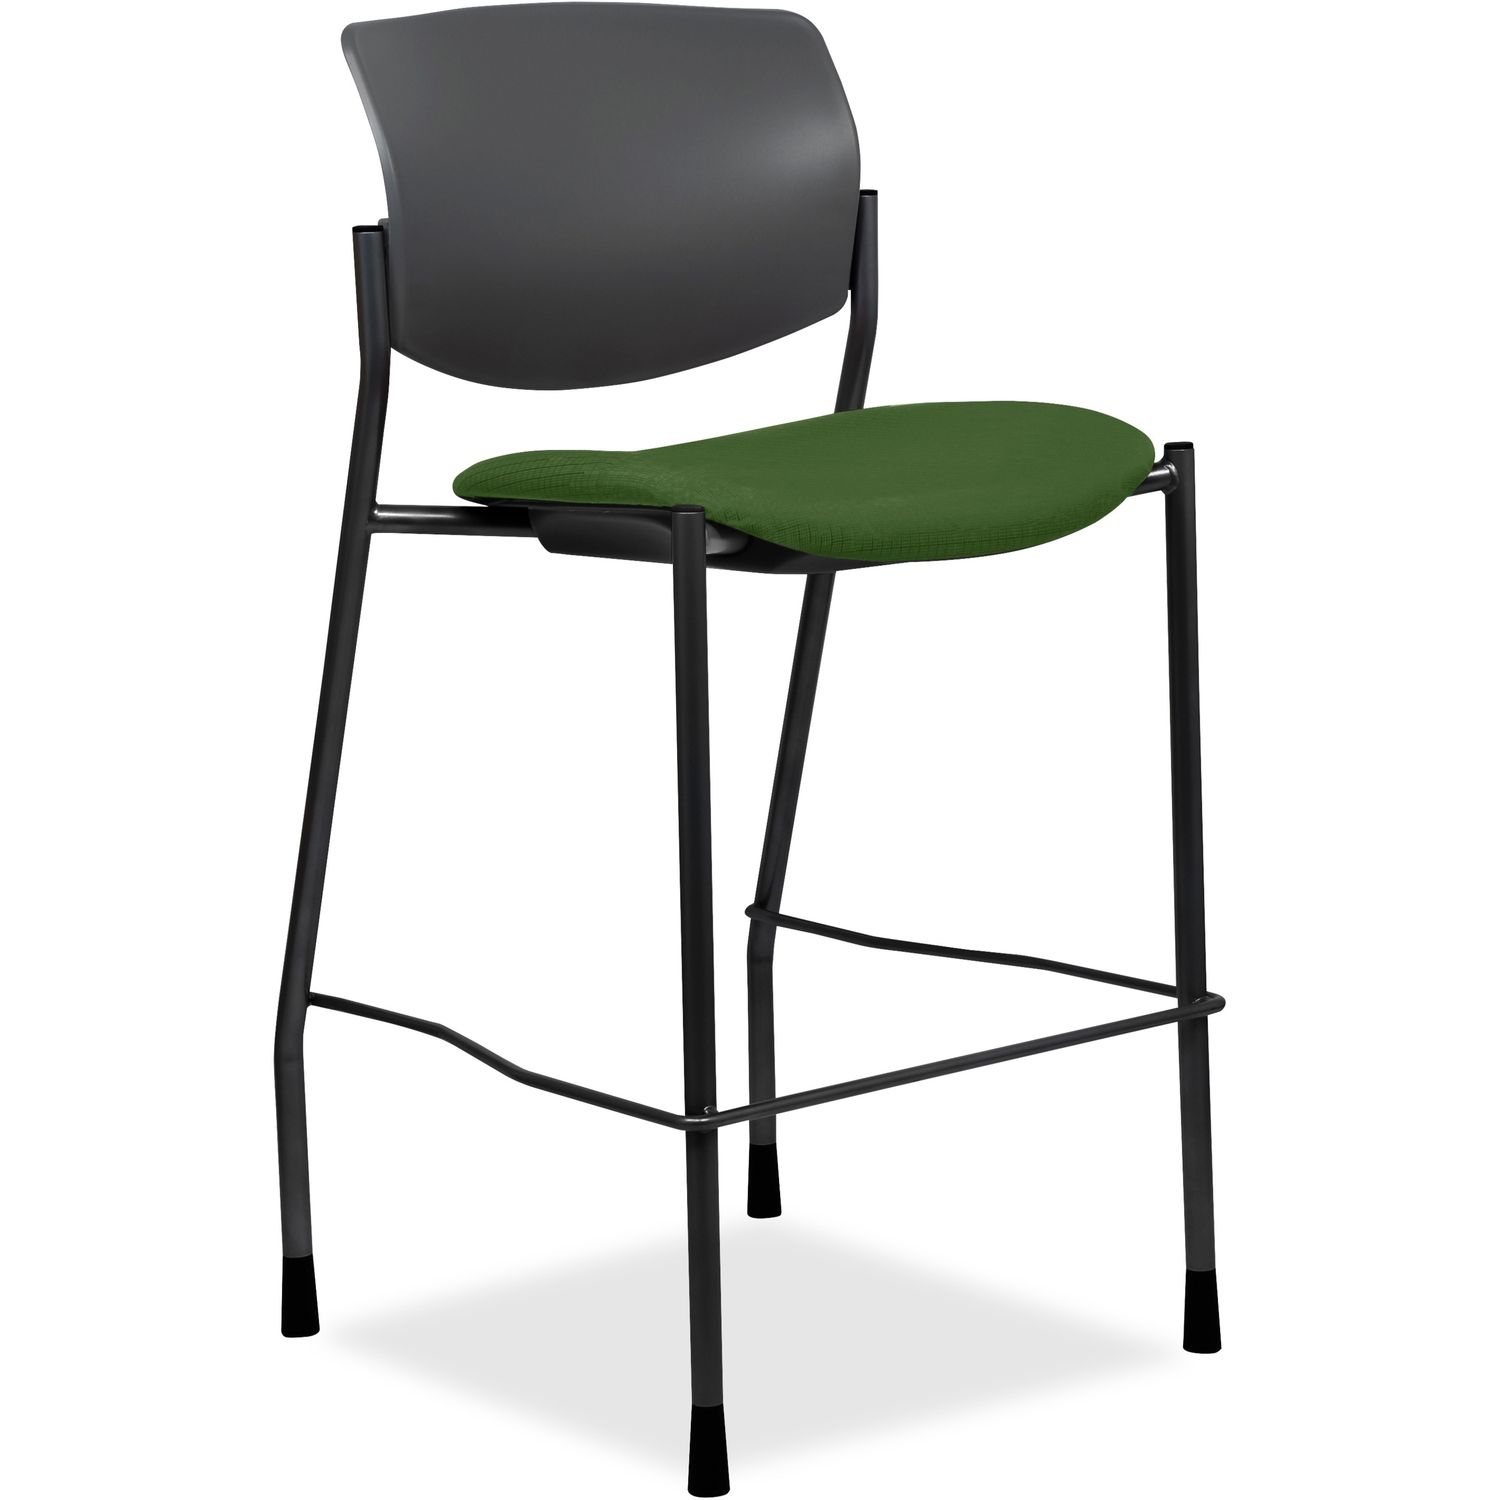 Fabric Seat Contemporary Stool Fern Green Crepe Fabric Seat, Black Plastic Back, Powder Coated, Black Tubular Steel Frame, Four-legged Base, 1 Each